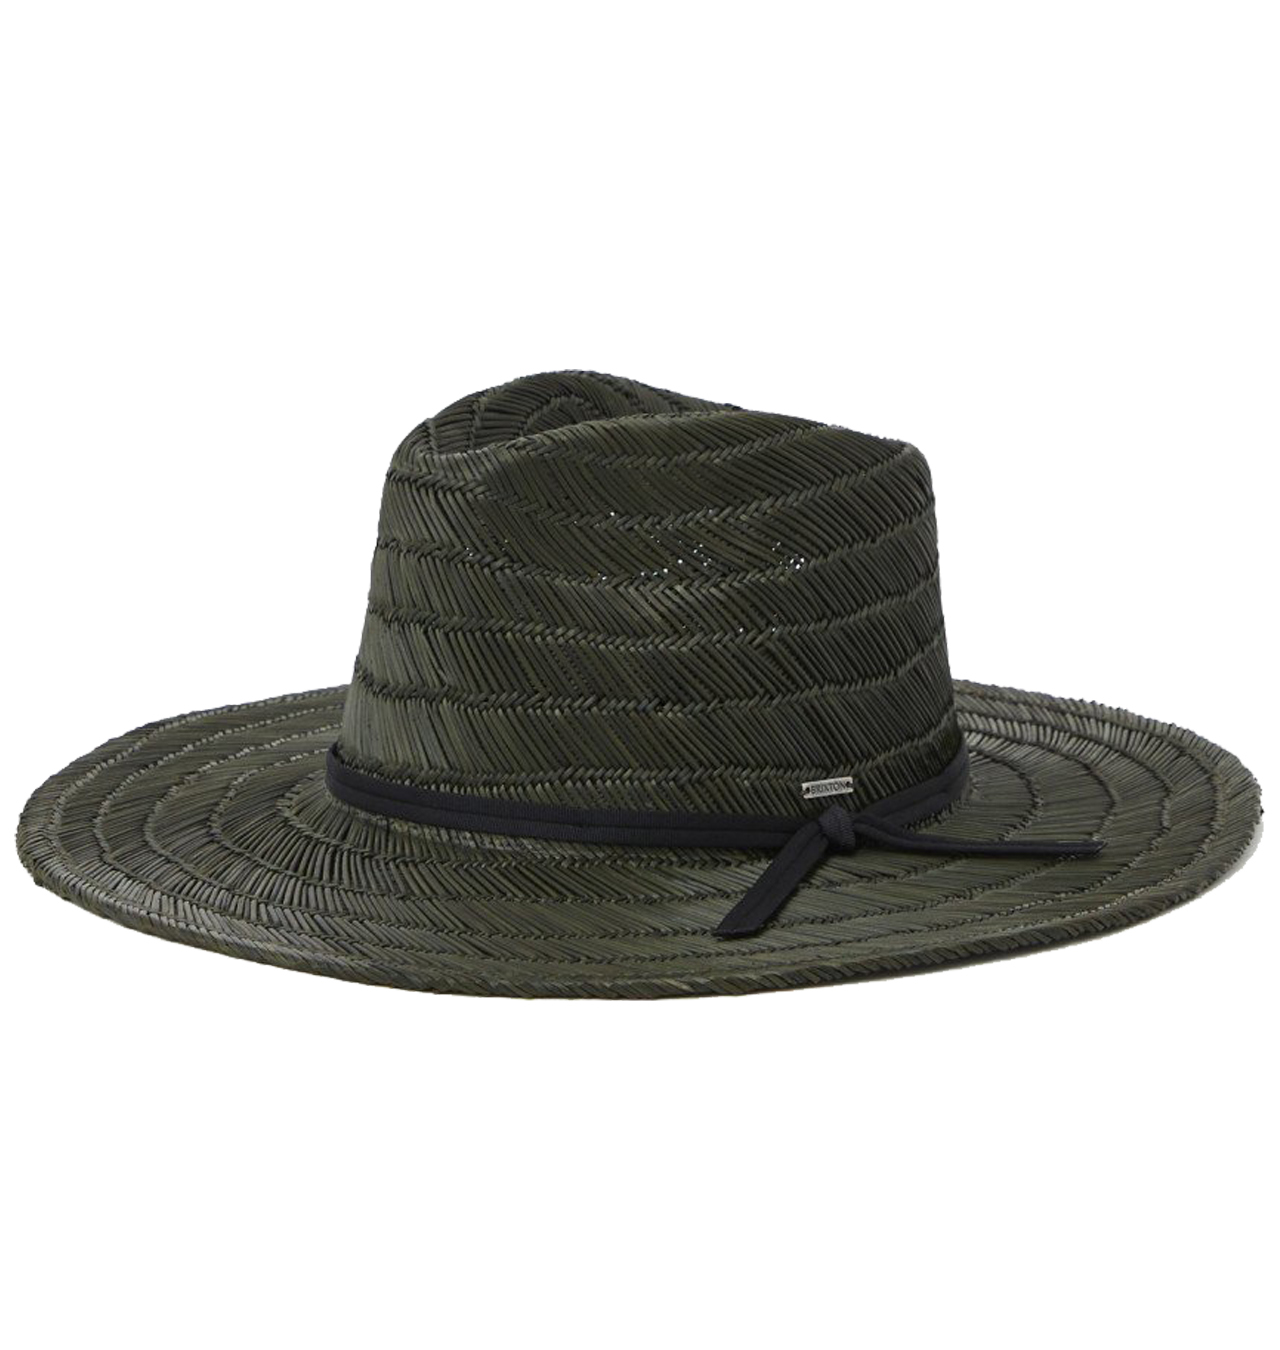 Brixton - Cohen Straw Cowboy Hat - Washed Black